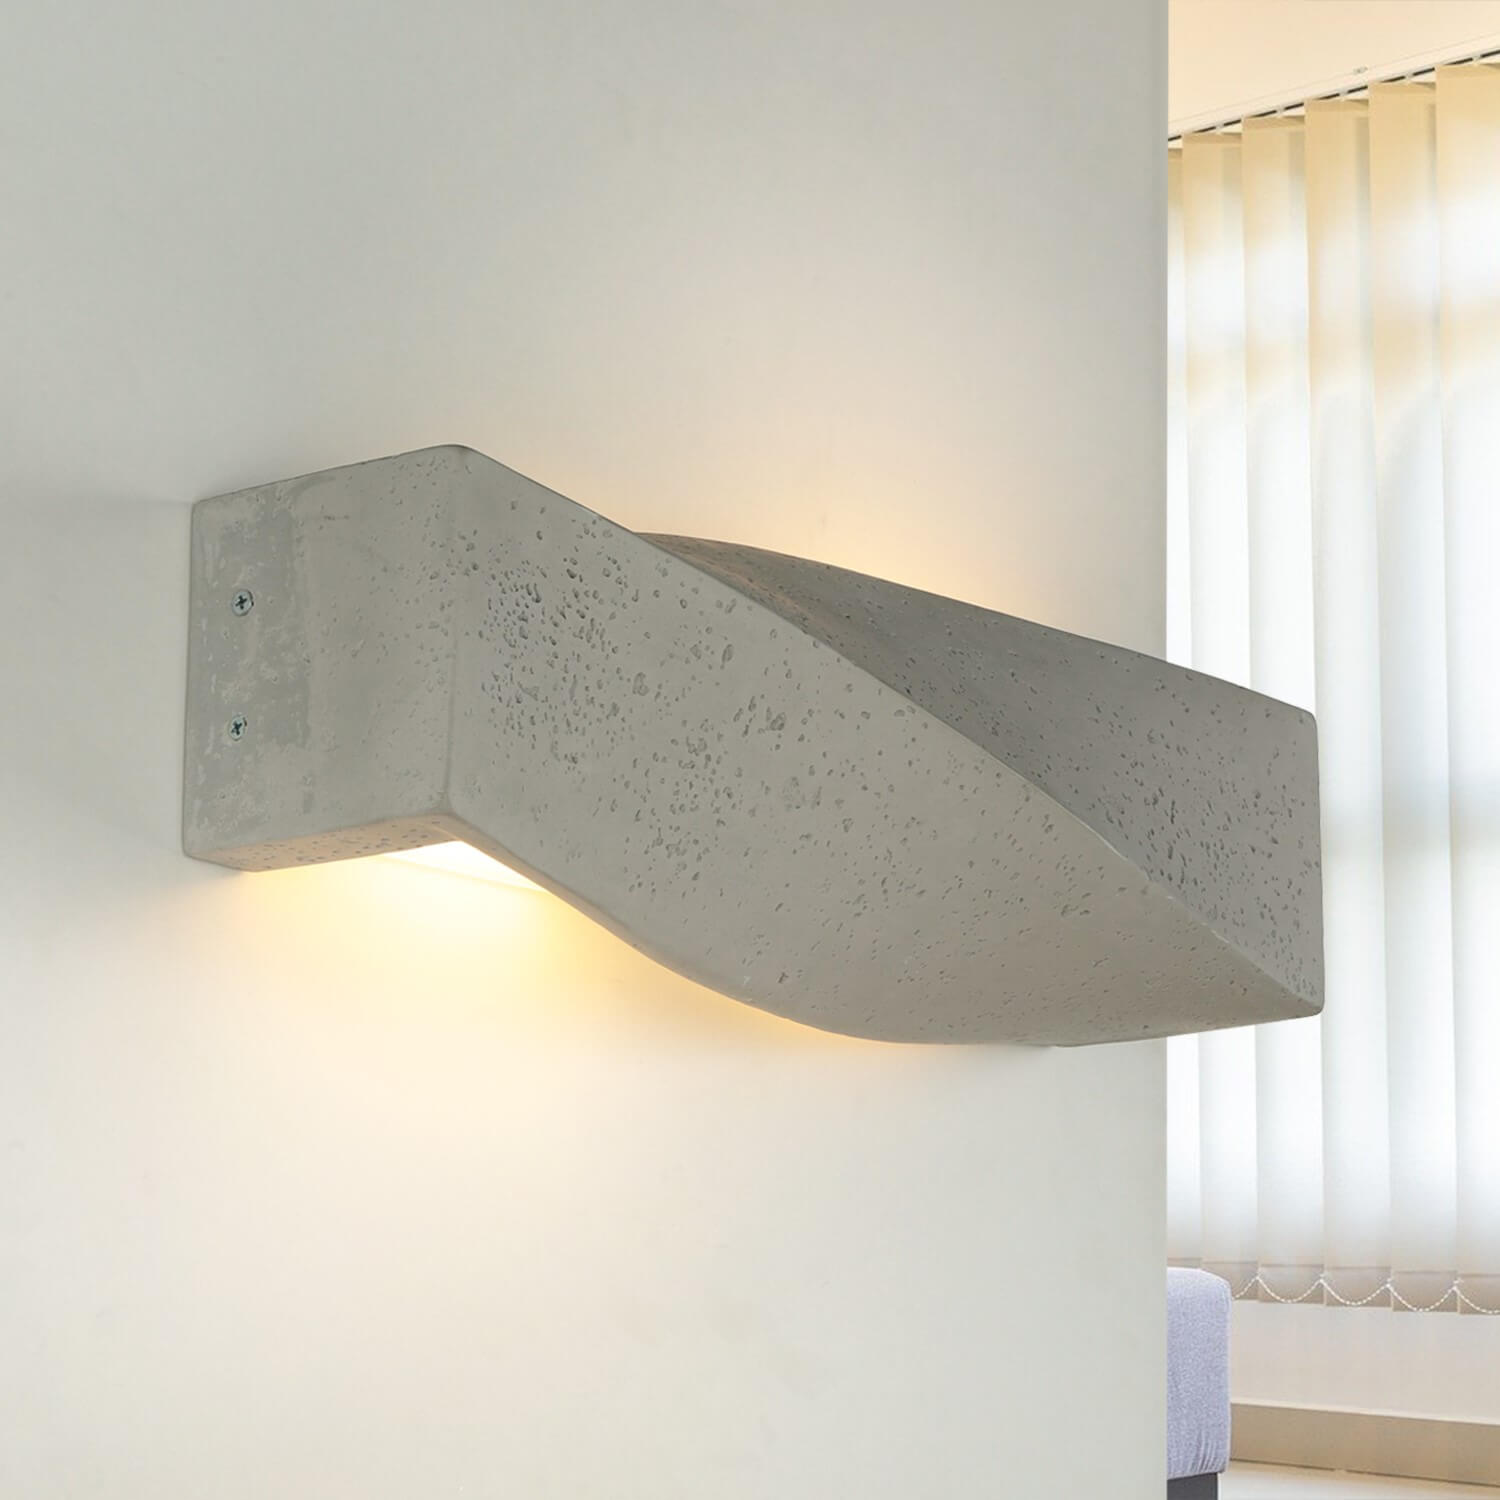 Beton Wandlampe SHANEY länglich B:45cm 2x E27 Modern